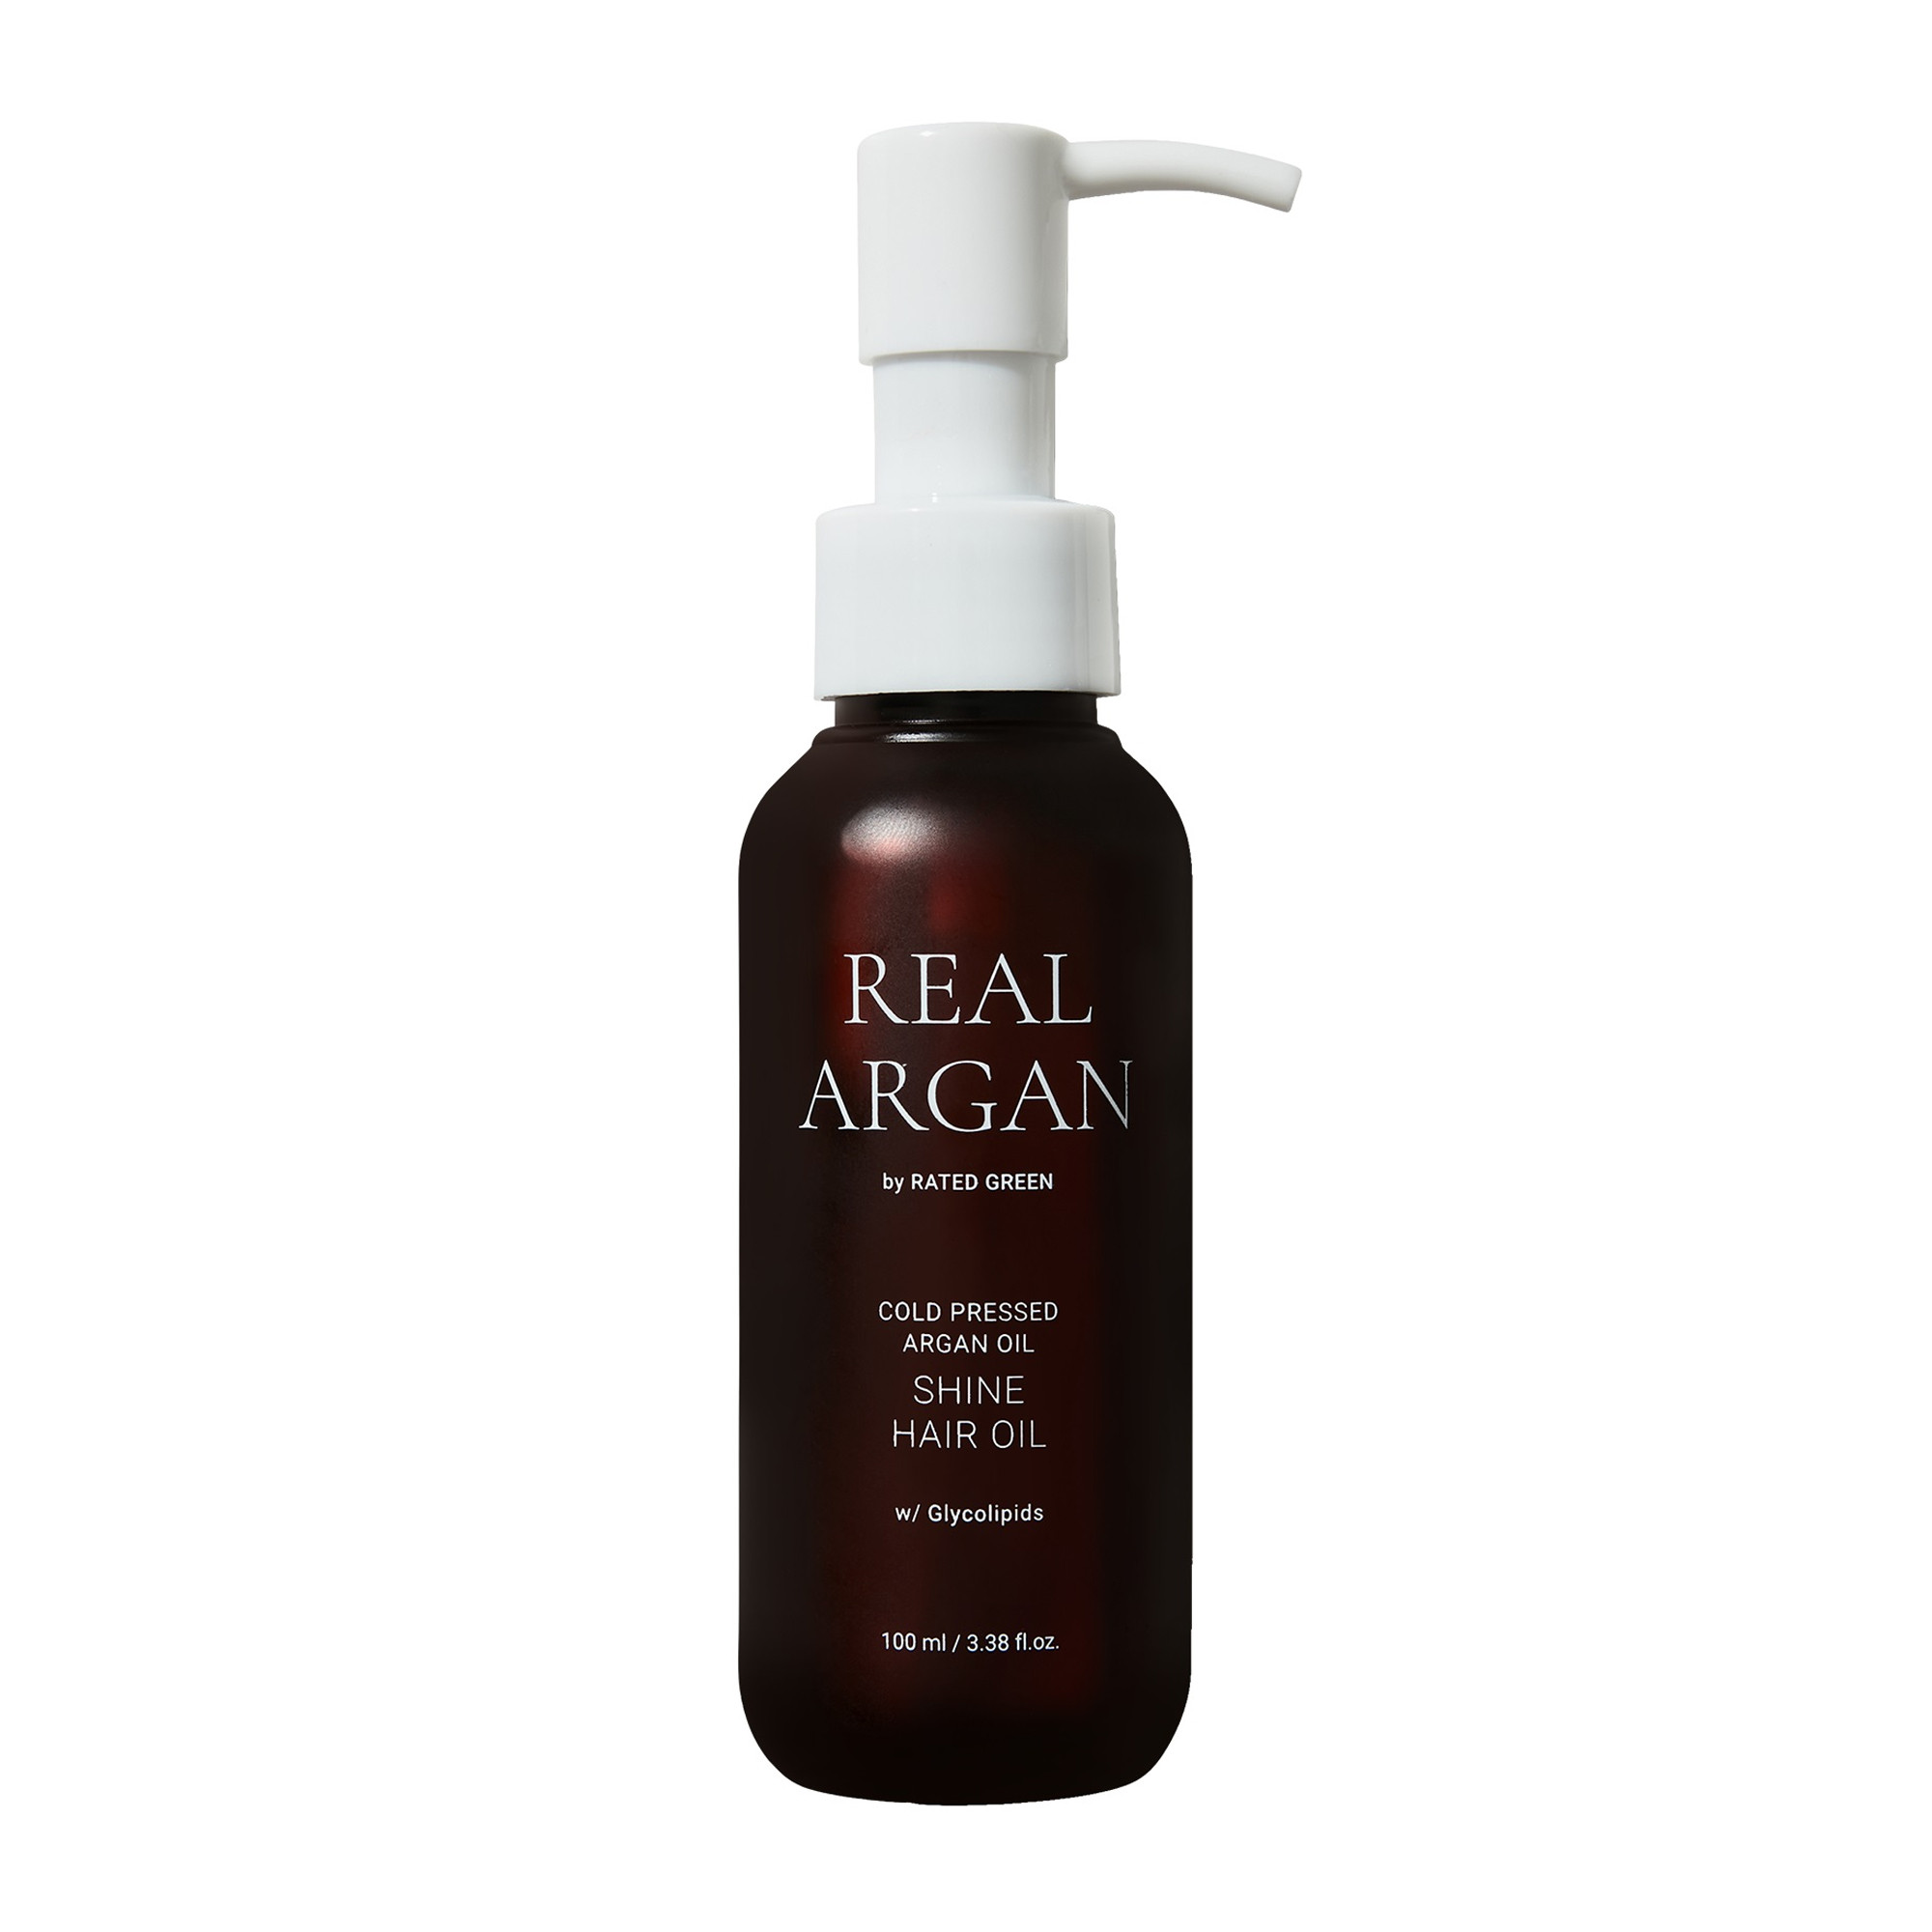 Rated Green Real Argan Shine Hair Oil - Арганова олія для волосся